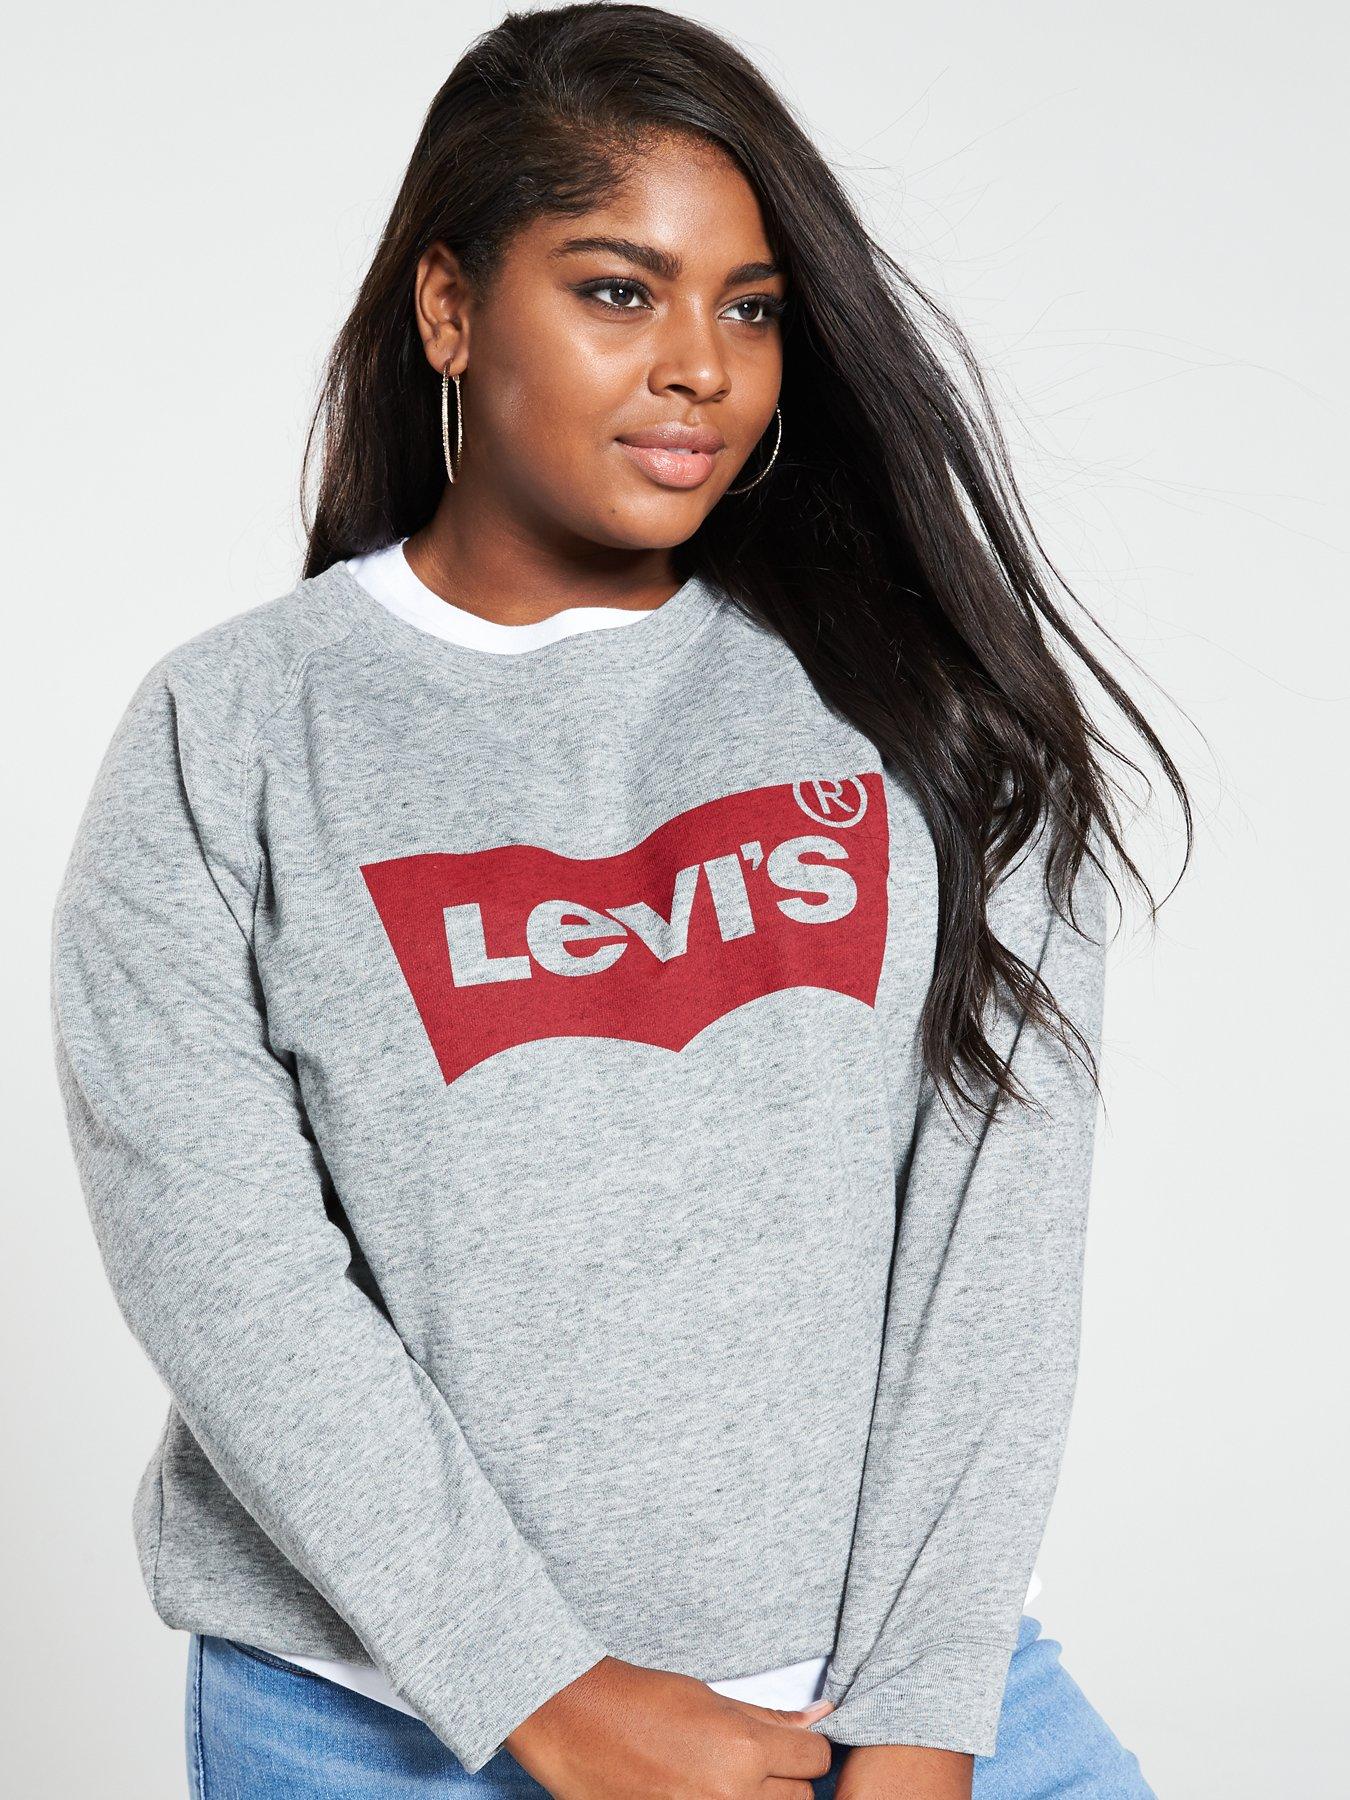 levi's sweatshirt womens uk